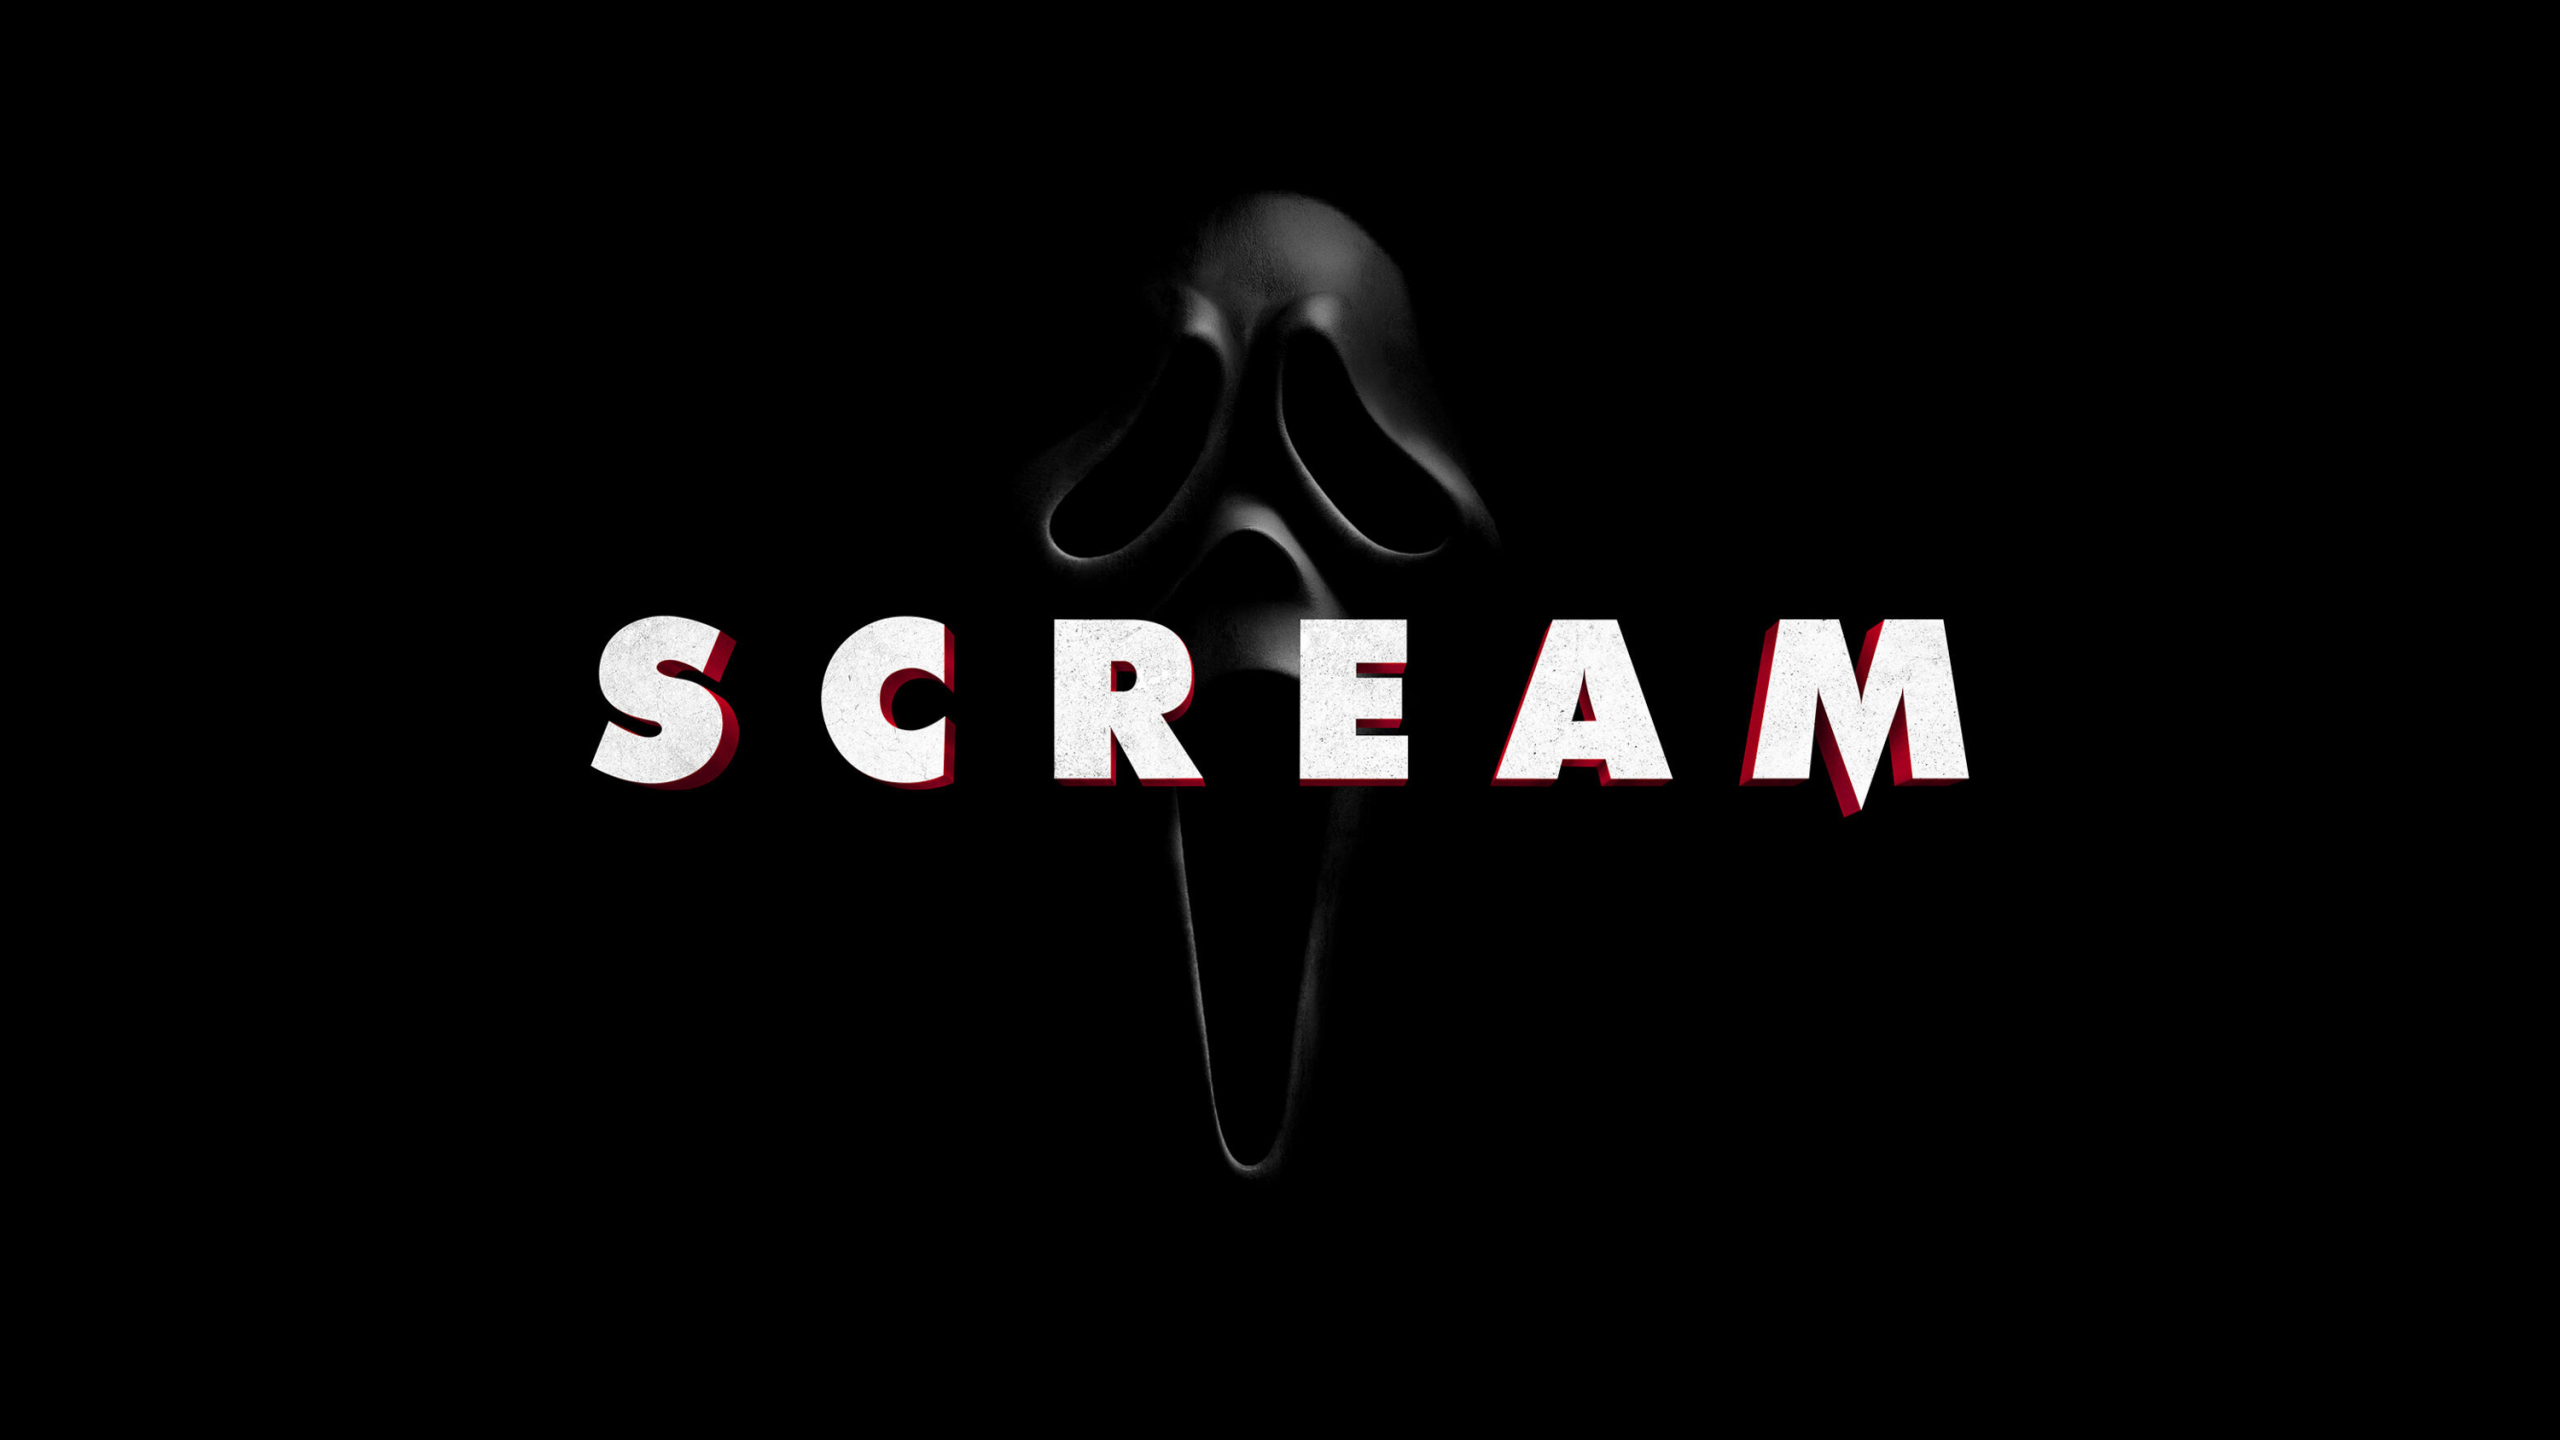 Jenna Ortega Neve Campbell David Arquette Dylan Minnette 2K Scream